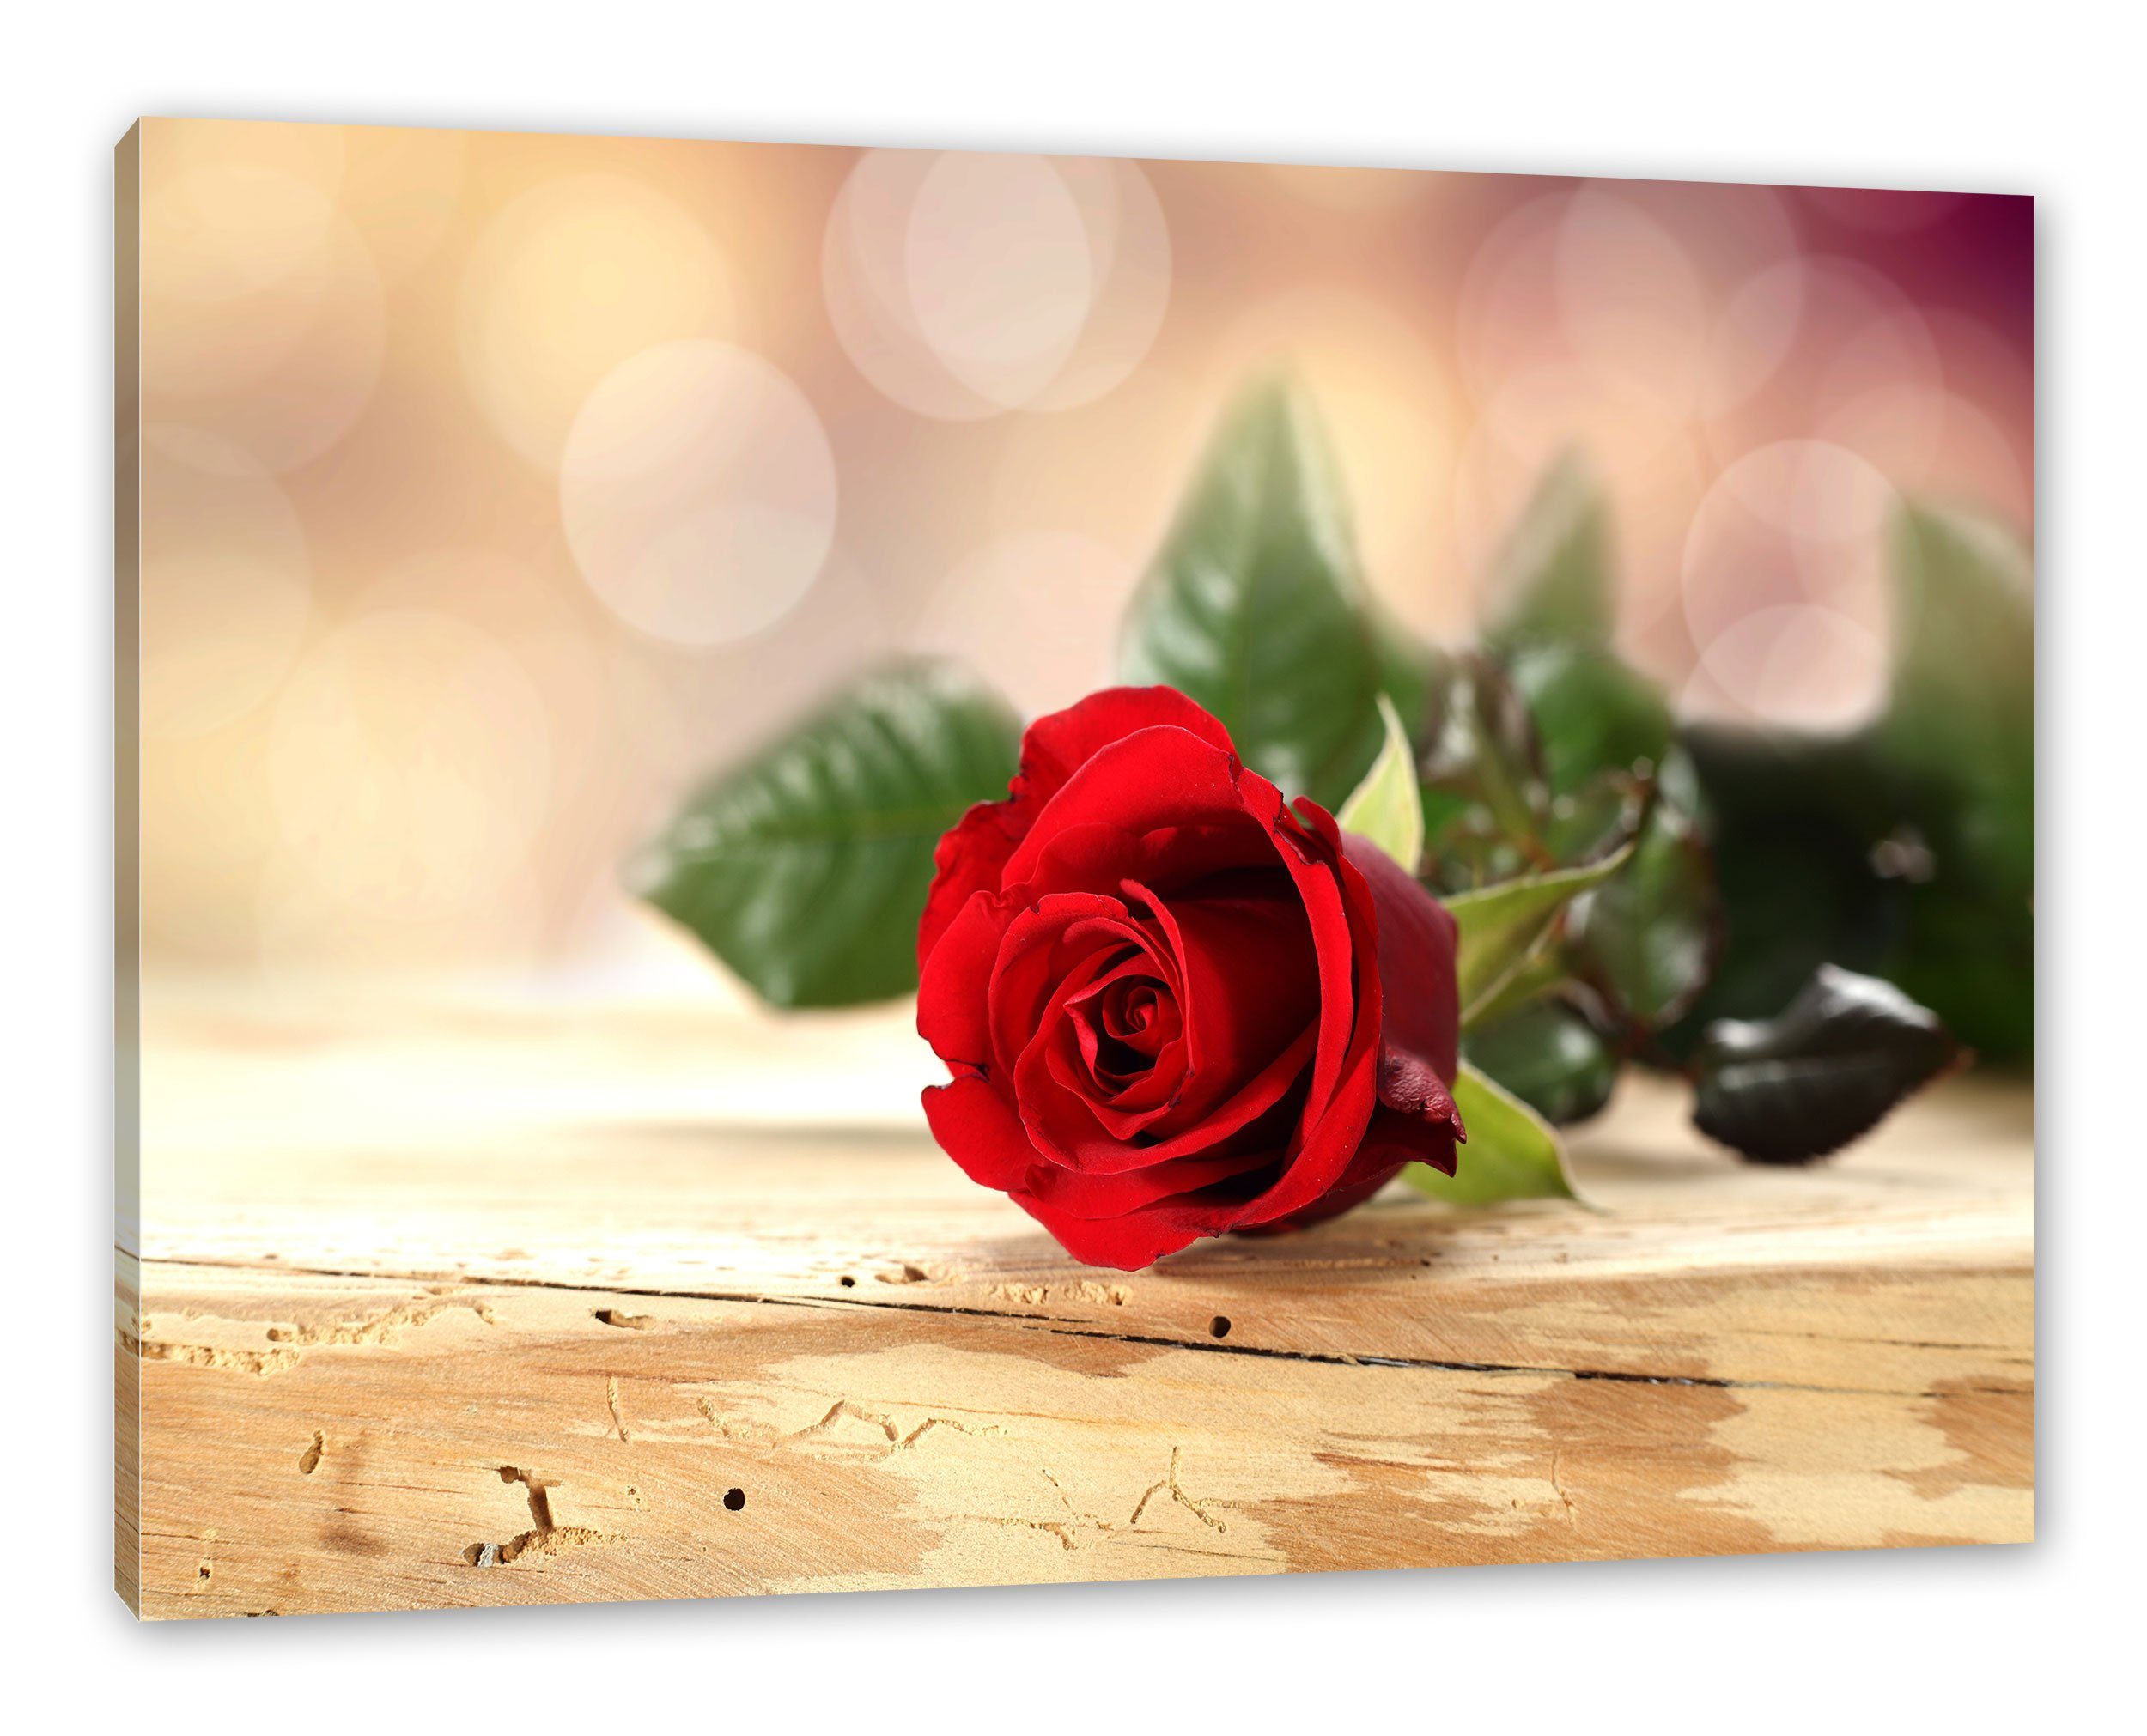 Pixxprint Leinwandbild Rose auf fertig St), inkl. auf Holztisch Leinwandbild bespannt, Zackenaufhänger (1 Holztisch, Rose